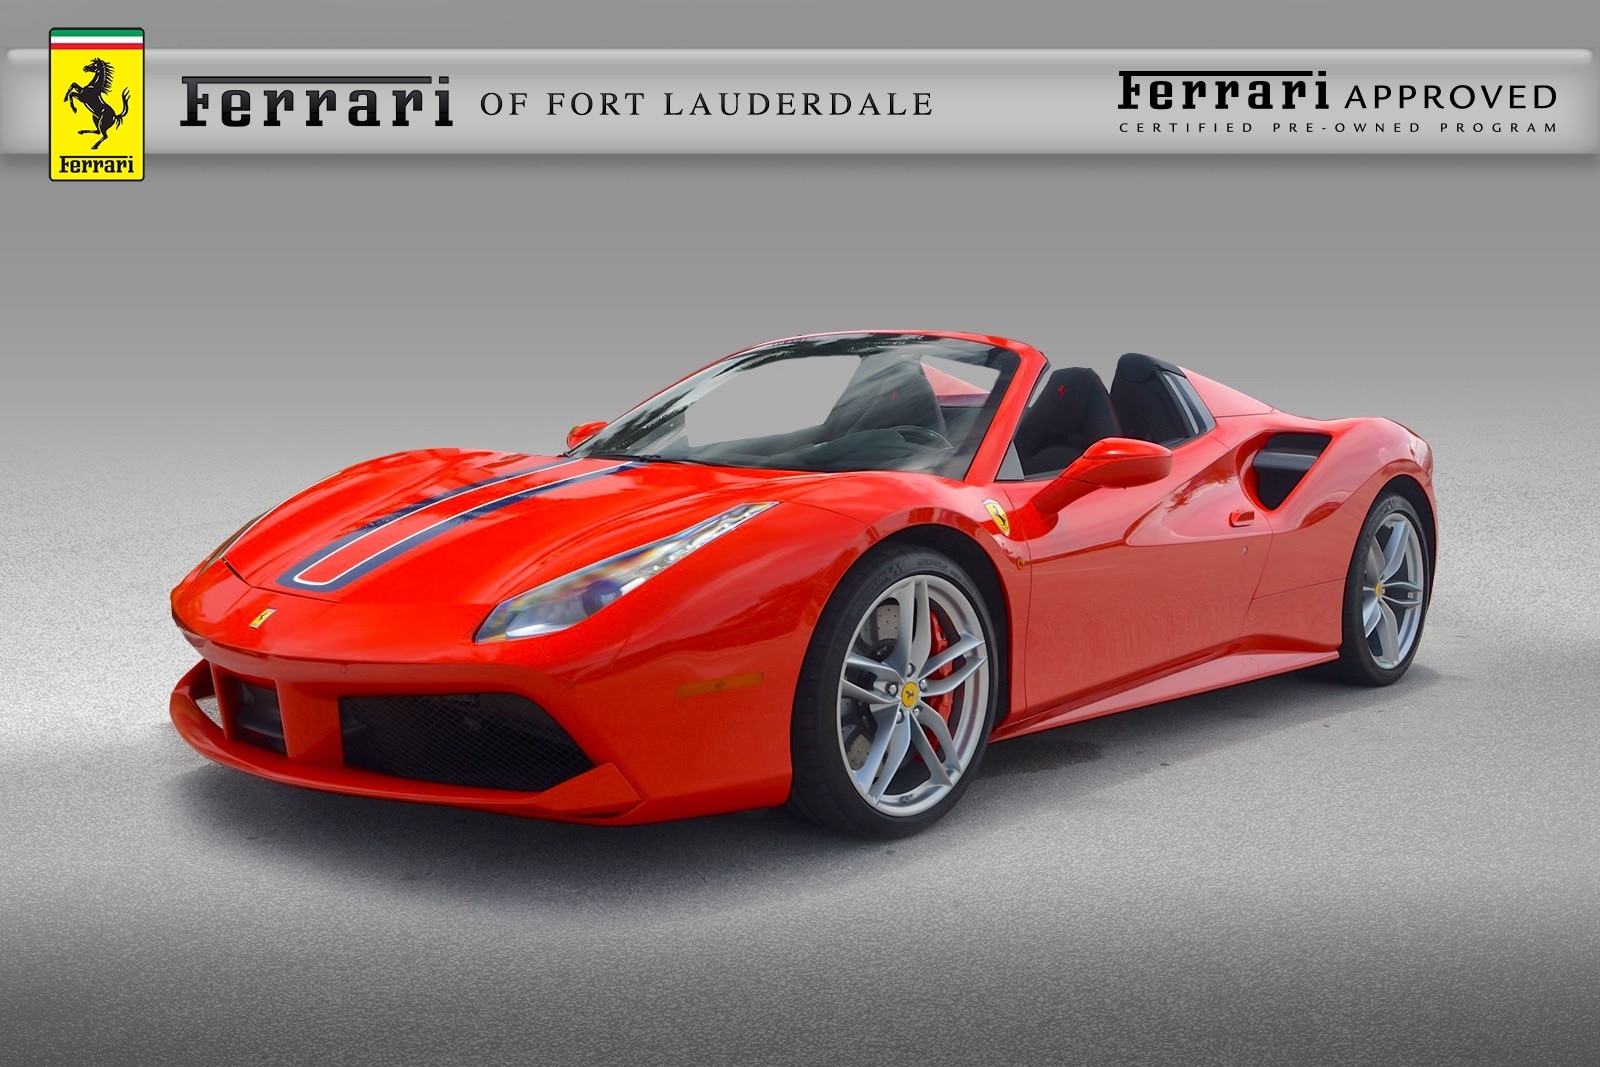 2017 Ferrari 488 34990000 For Sale In Fort Lauderdale Fl